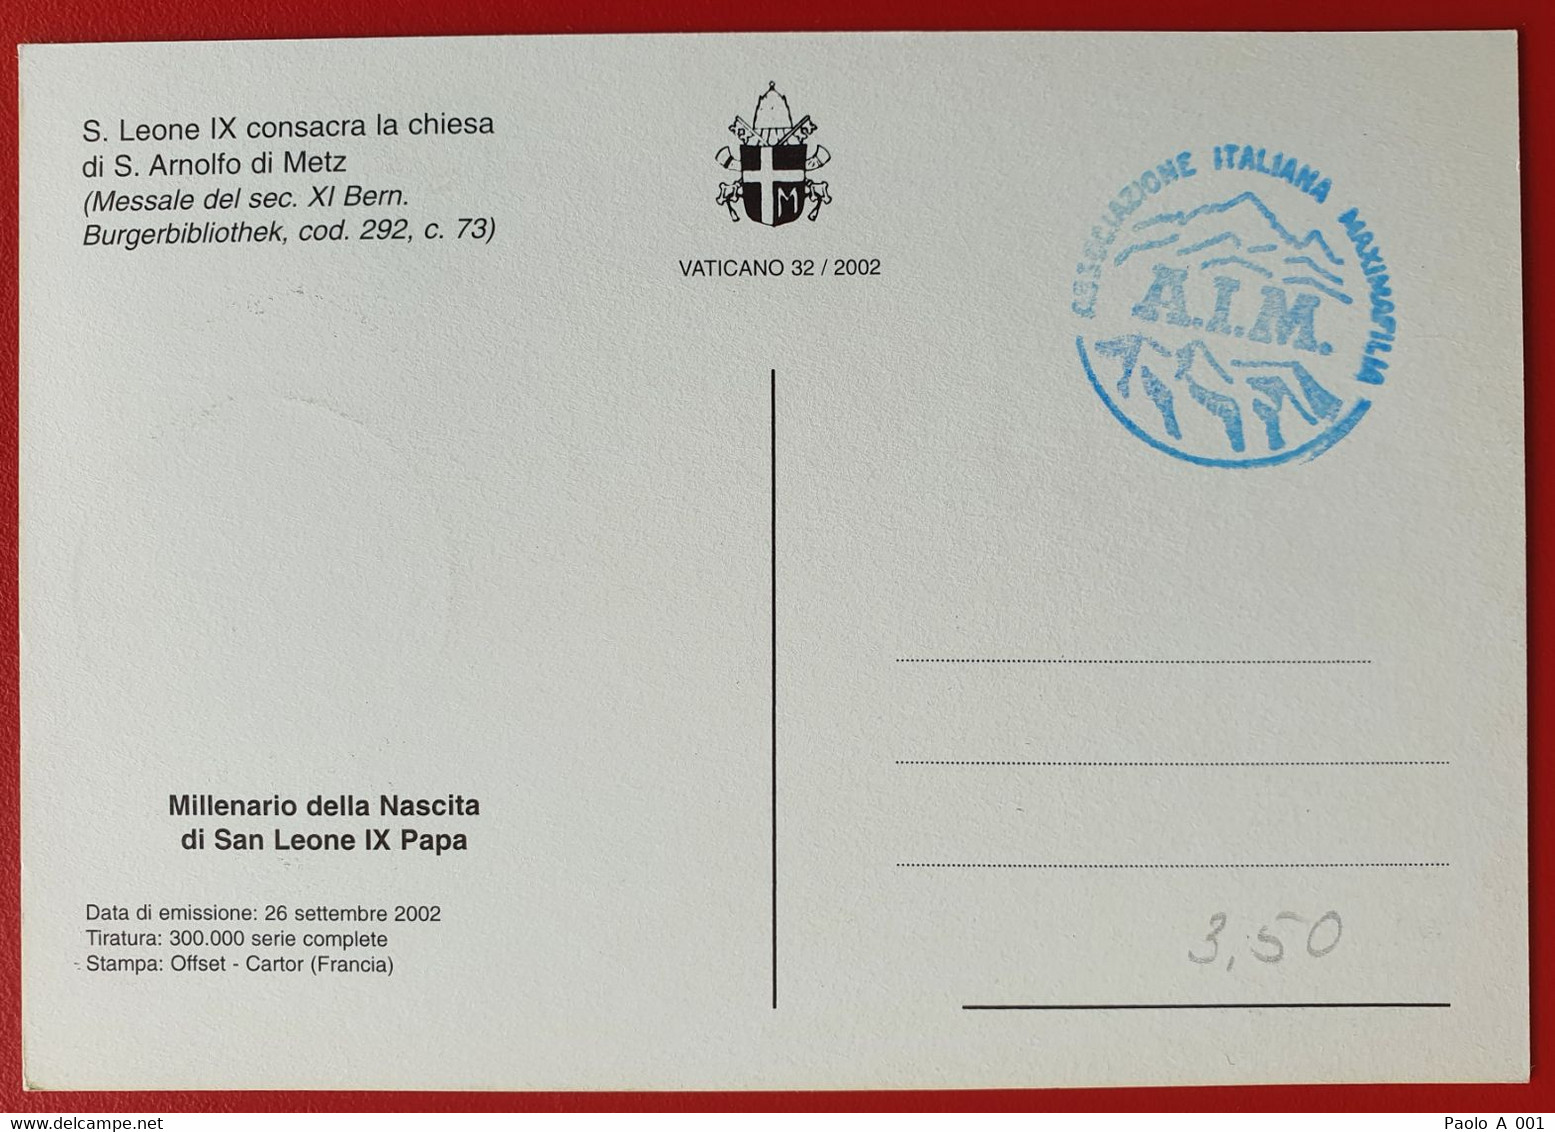 VATICANO VATIKAN VATICAN 2002 POPE LEO IX CHURCH ARNULF OF METZ FD MAXIMUM CARD BURGERBIBLIOTHEK BERN - Briefe U. Dokumente